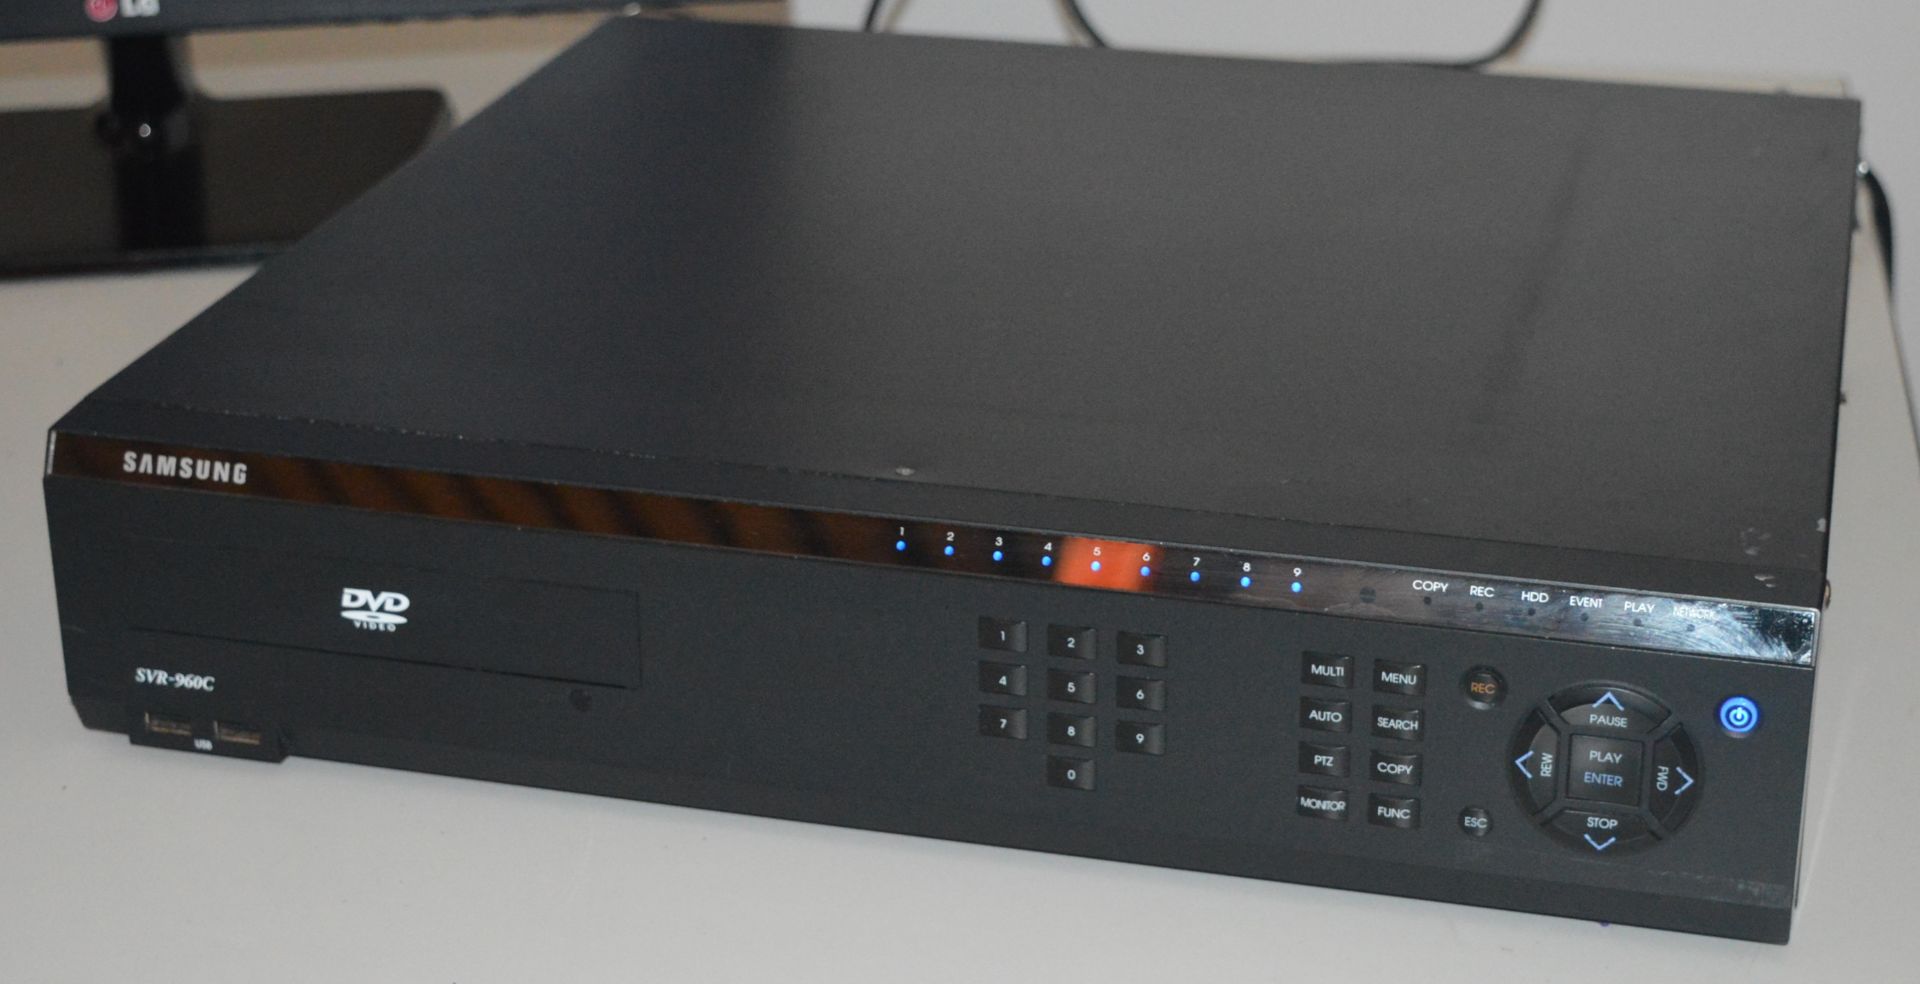 1 x Samsung CCTV Digital Video Recorder - SVR-960C - 5TB Hard Drive Storage - Supports Up To 9